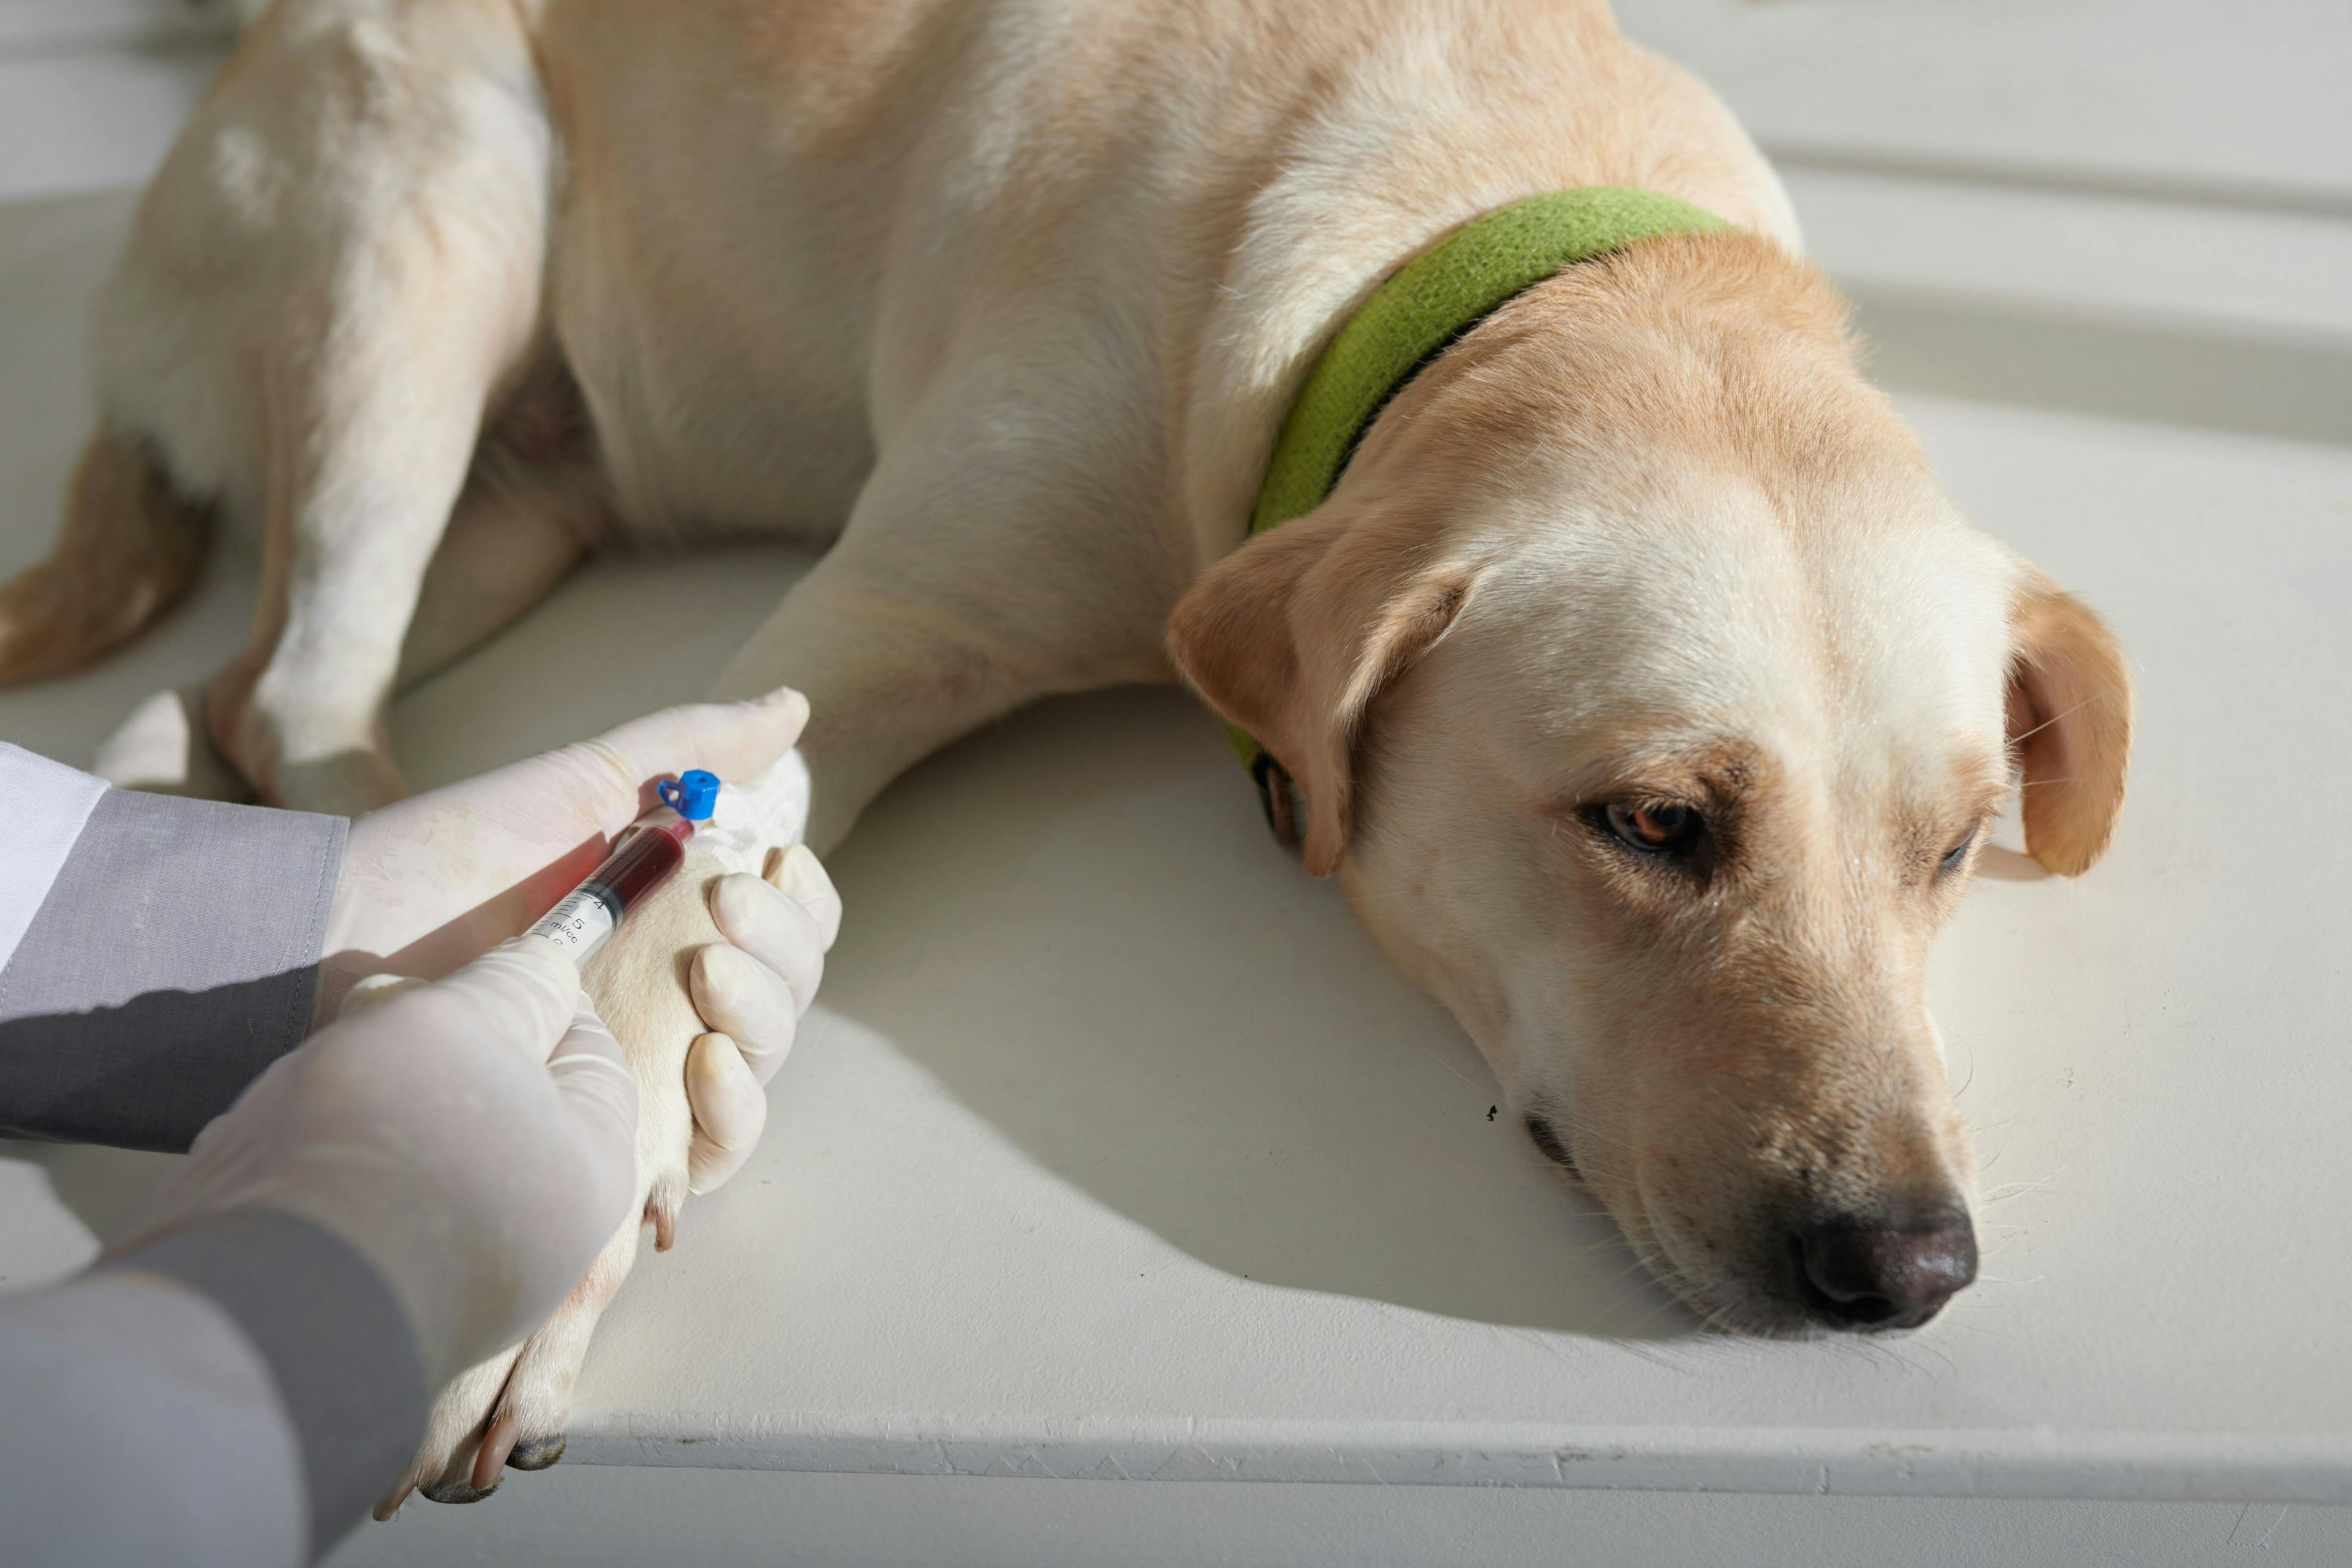 Dog receiving a blood draw